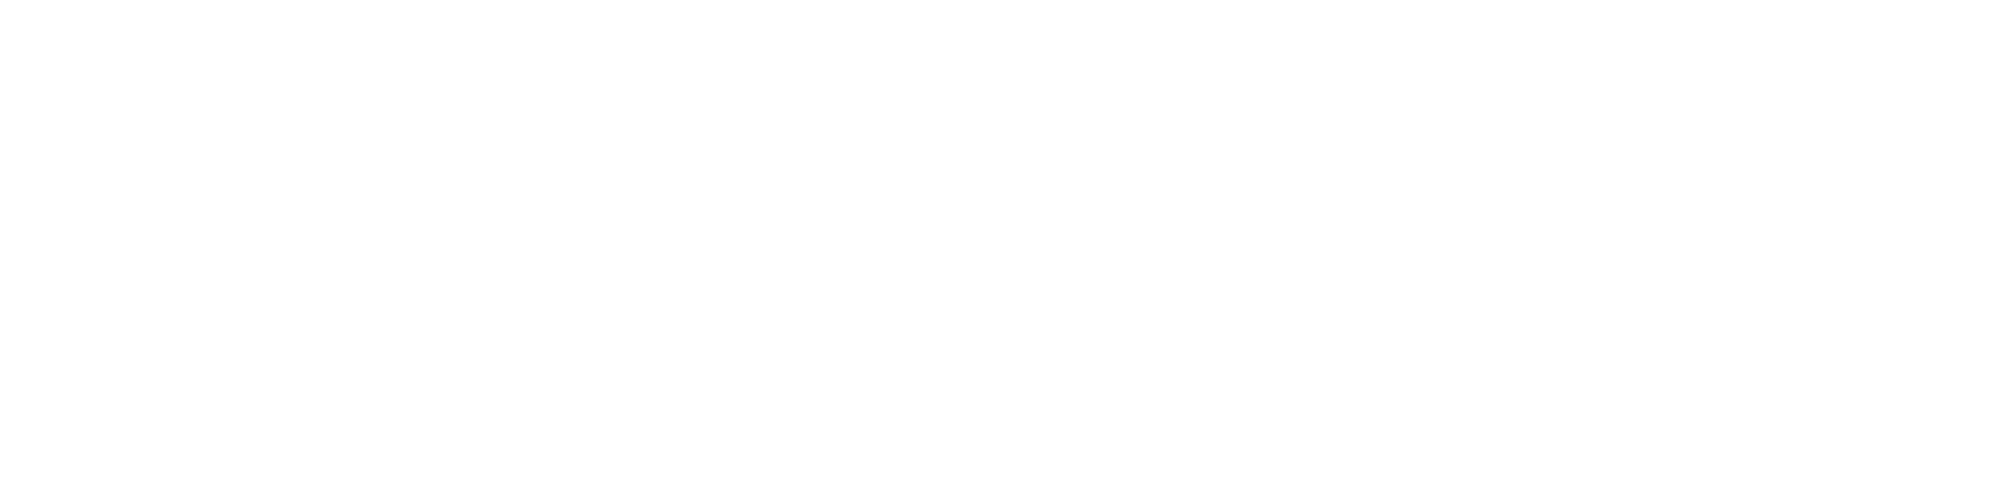 Building Health Lab